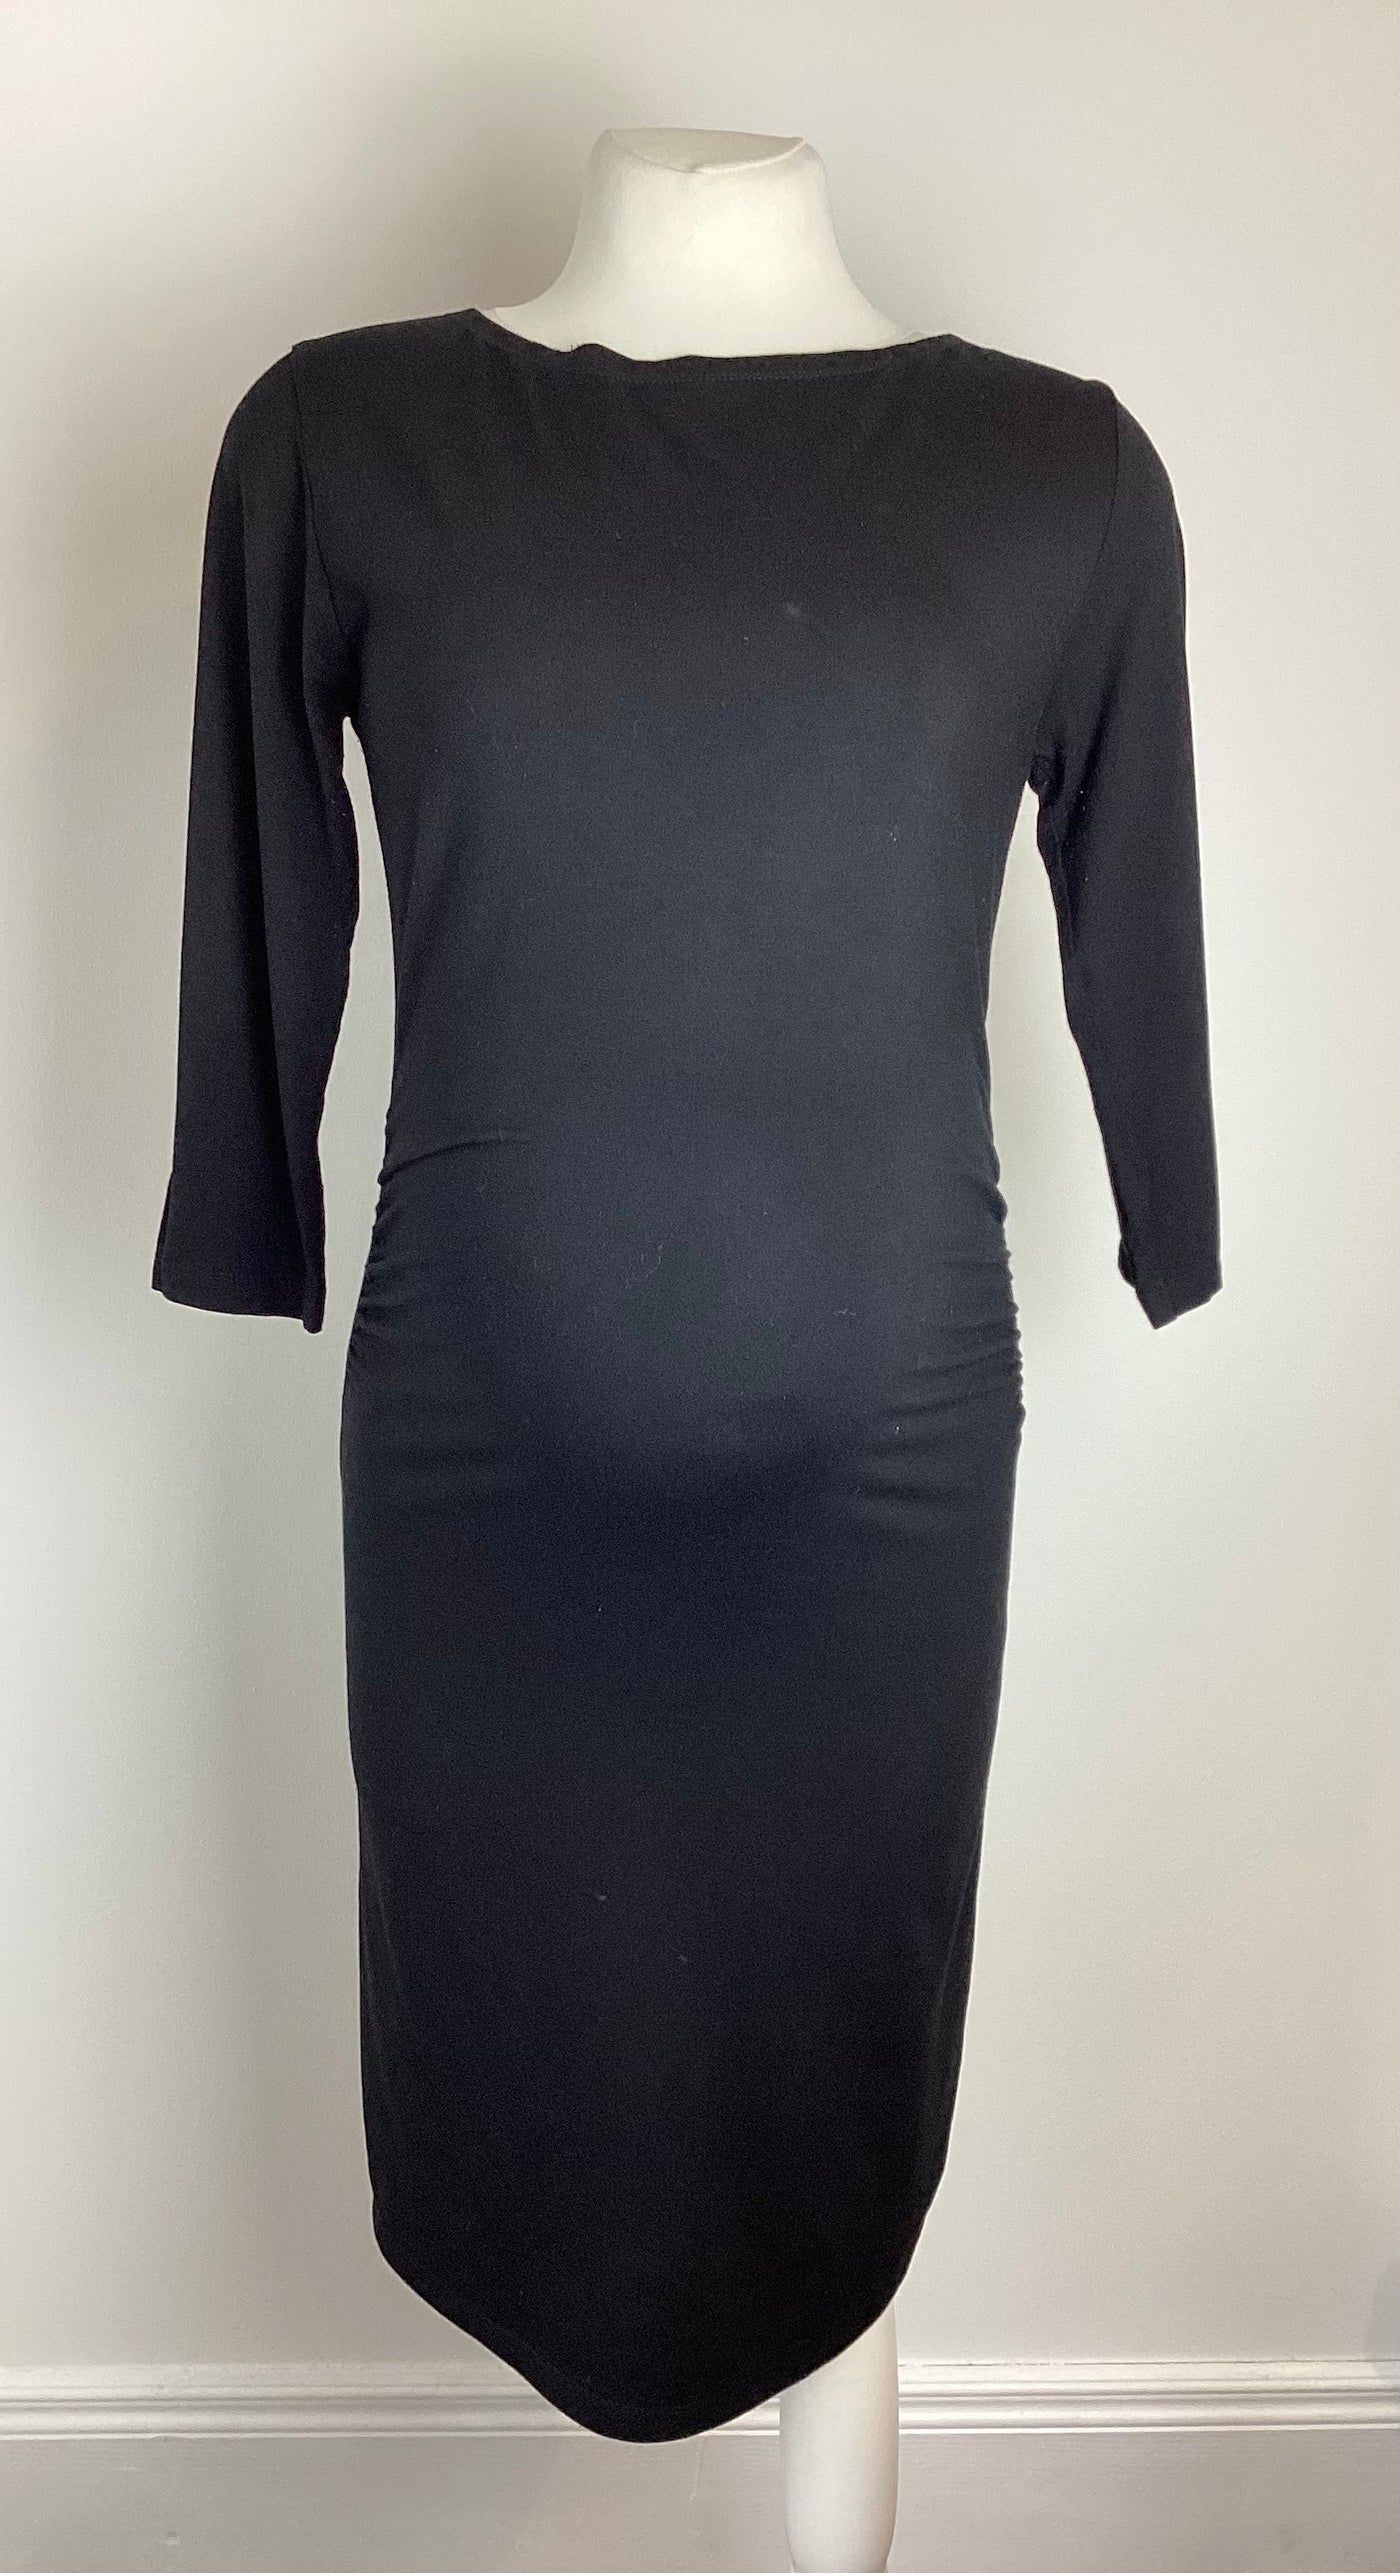 Seraphine Black 3/4 Sleeve Midi Dress - Size S (Approx UK 8/10)